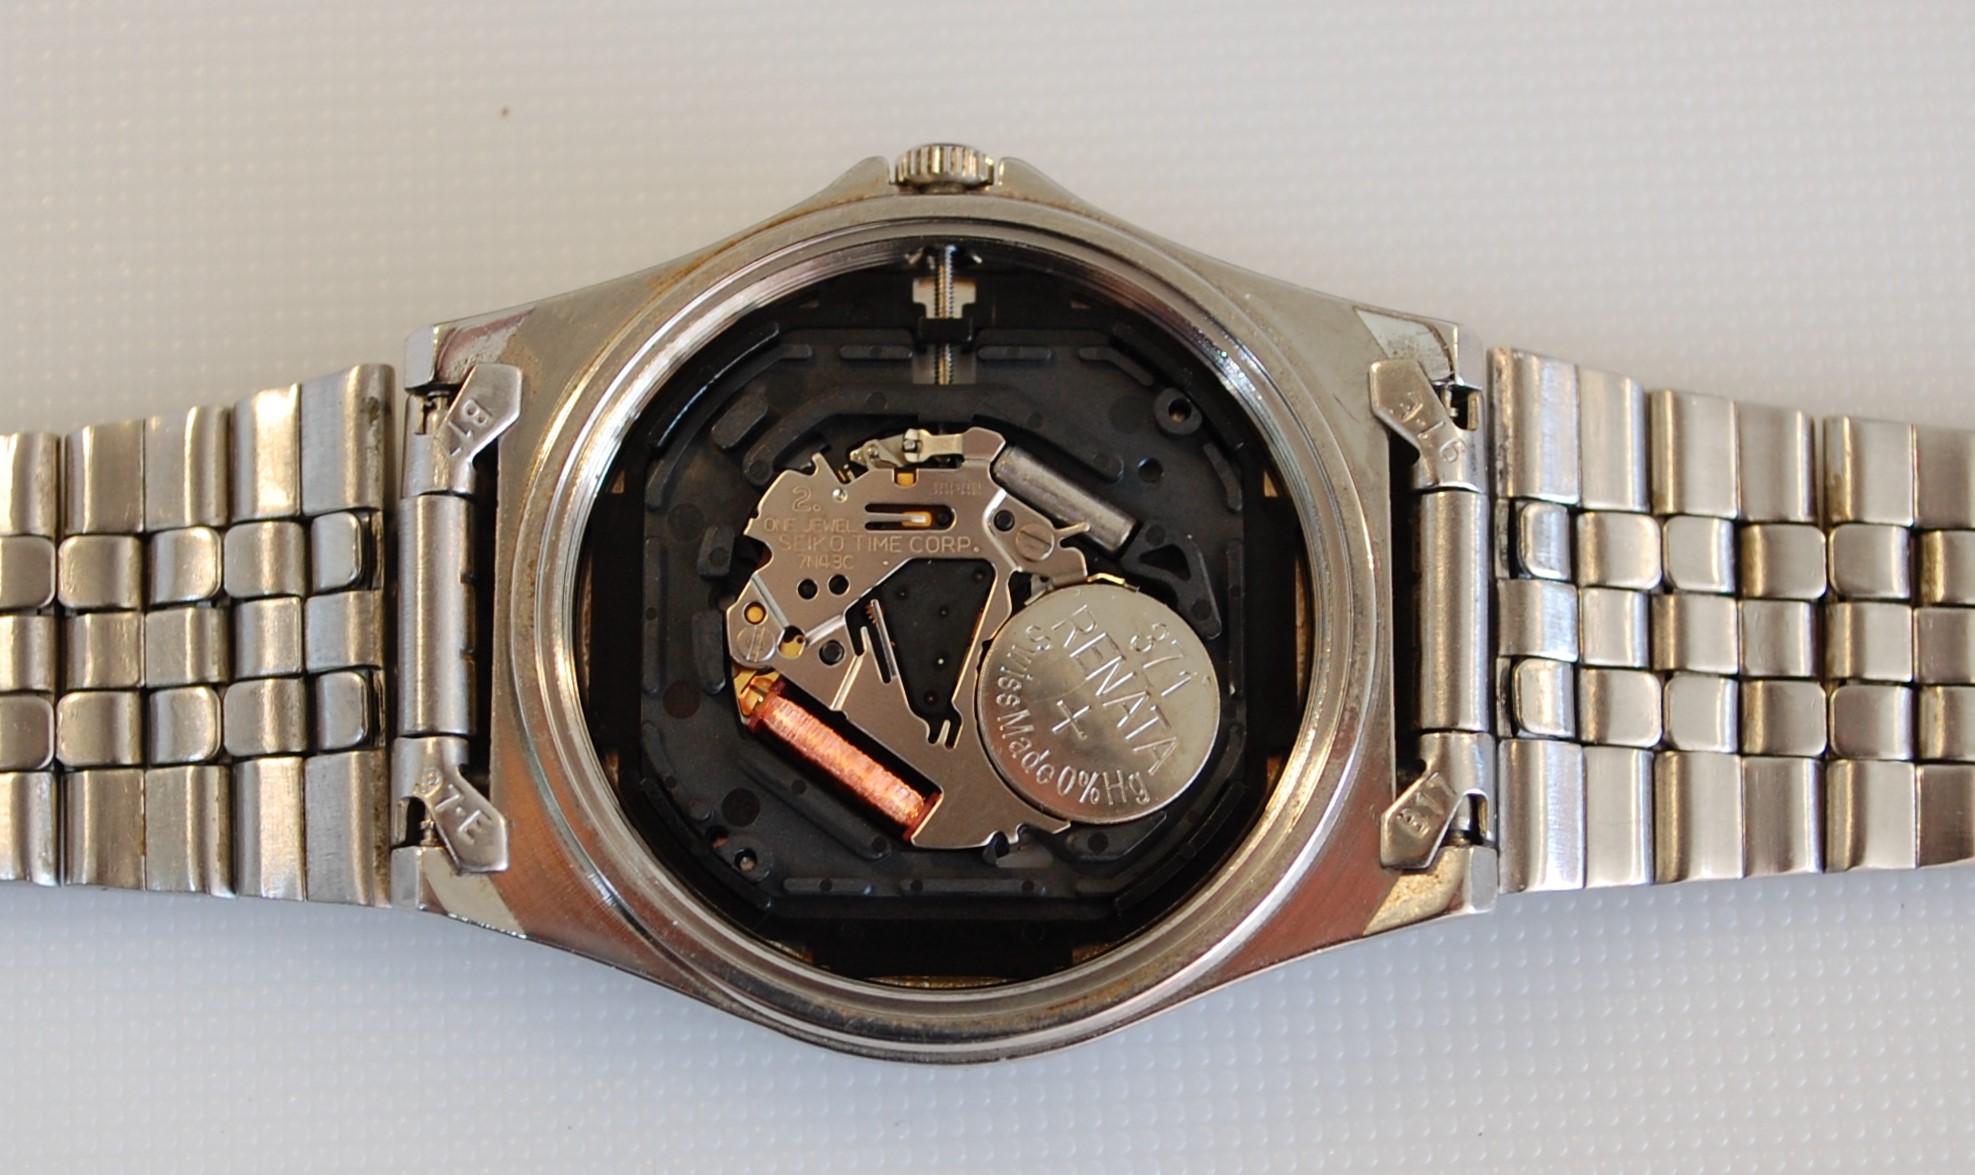 SOLD 1998 Seiko SQ100 watch 7N43-8001 - Birth Year Watches